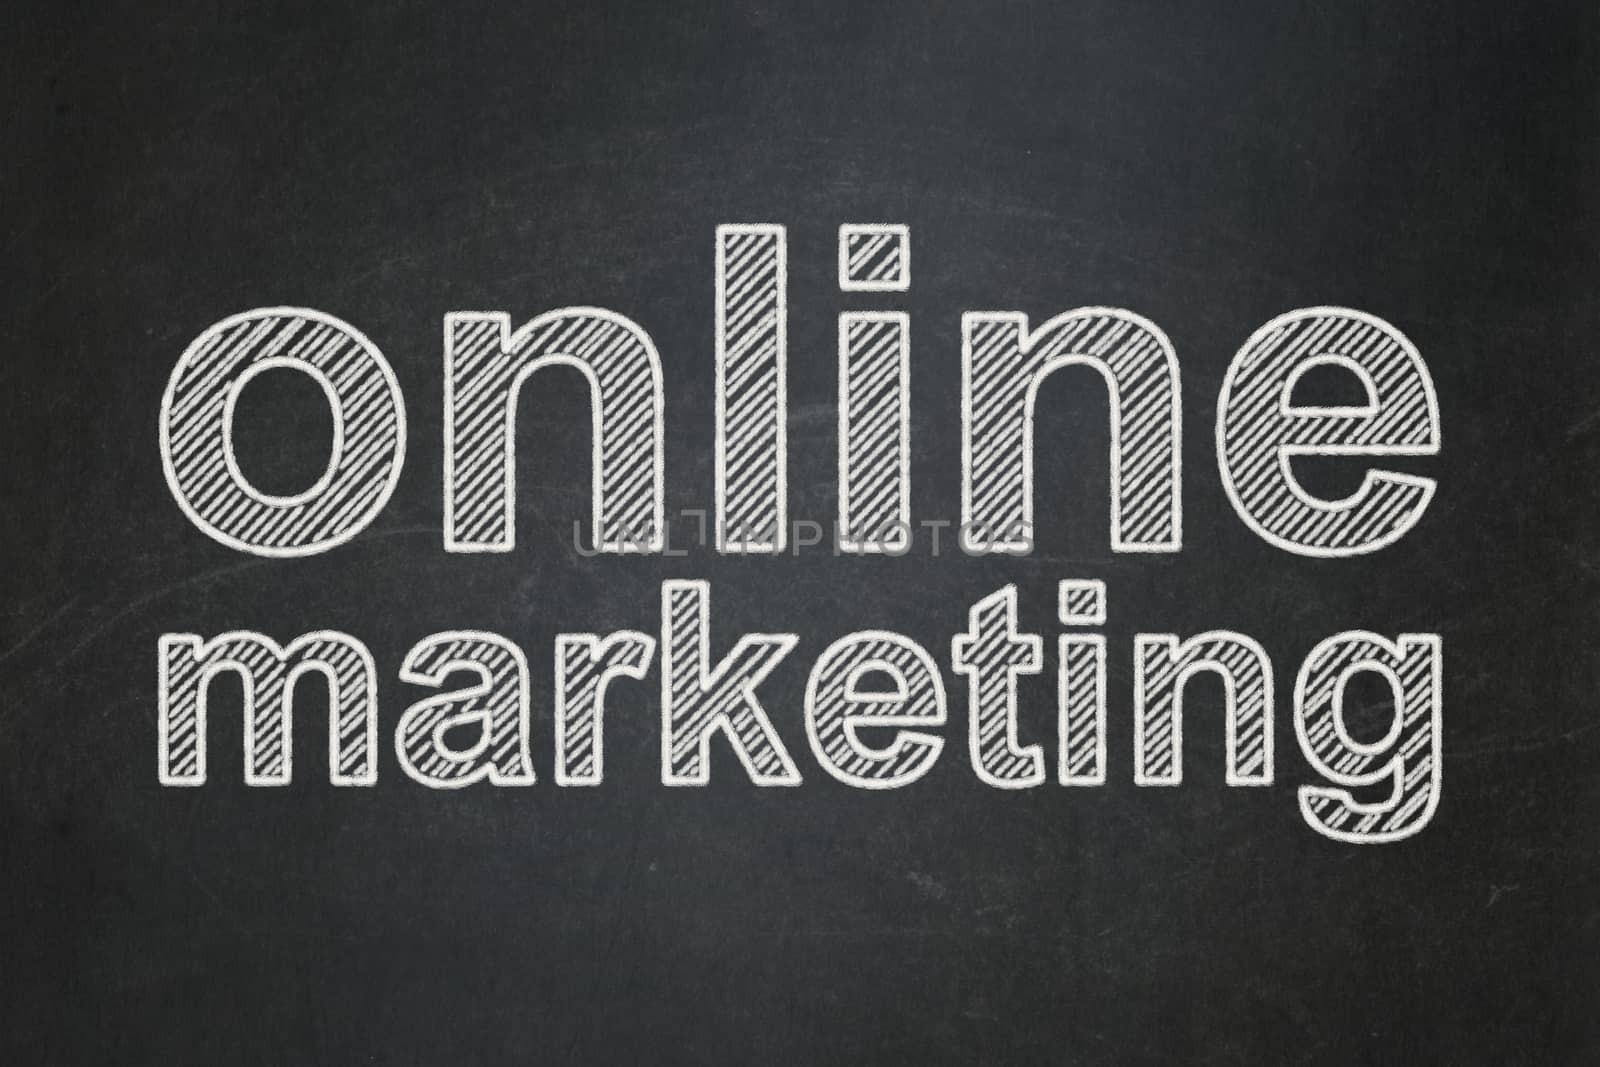 Advertising concept: Online Marketing on chalkboard background by maxkabakov